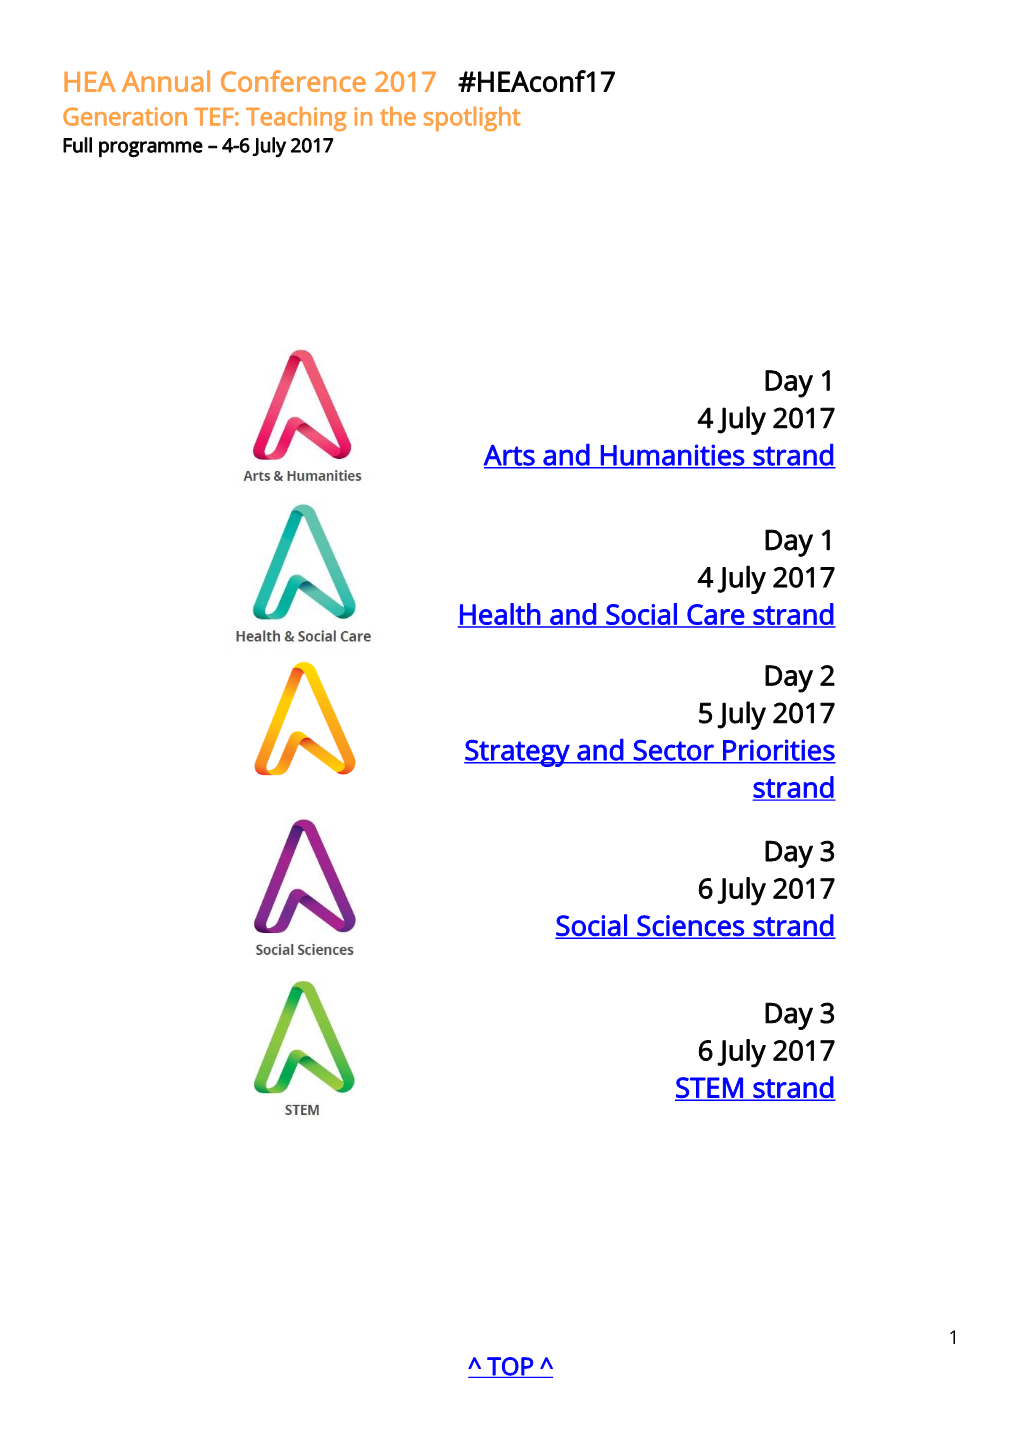 Full Programme – 4-6 July 2017